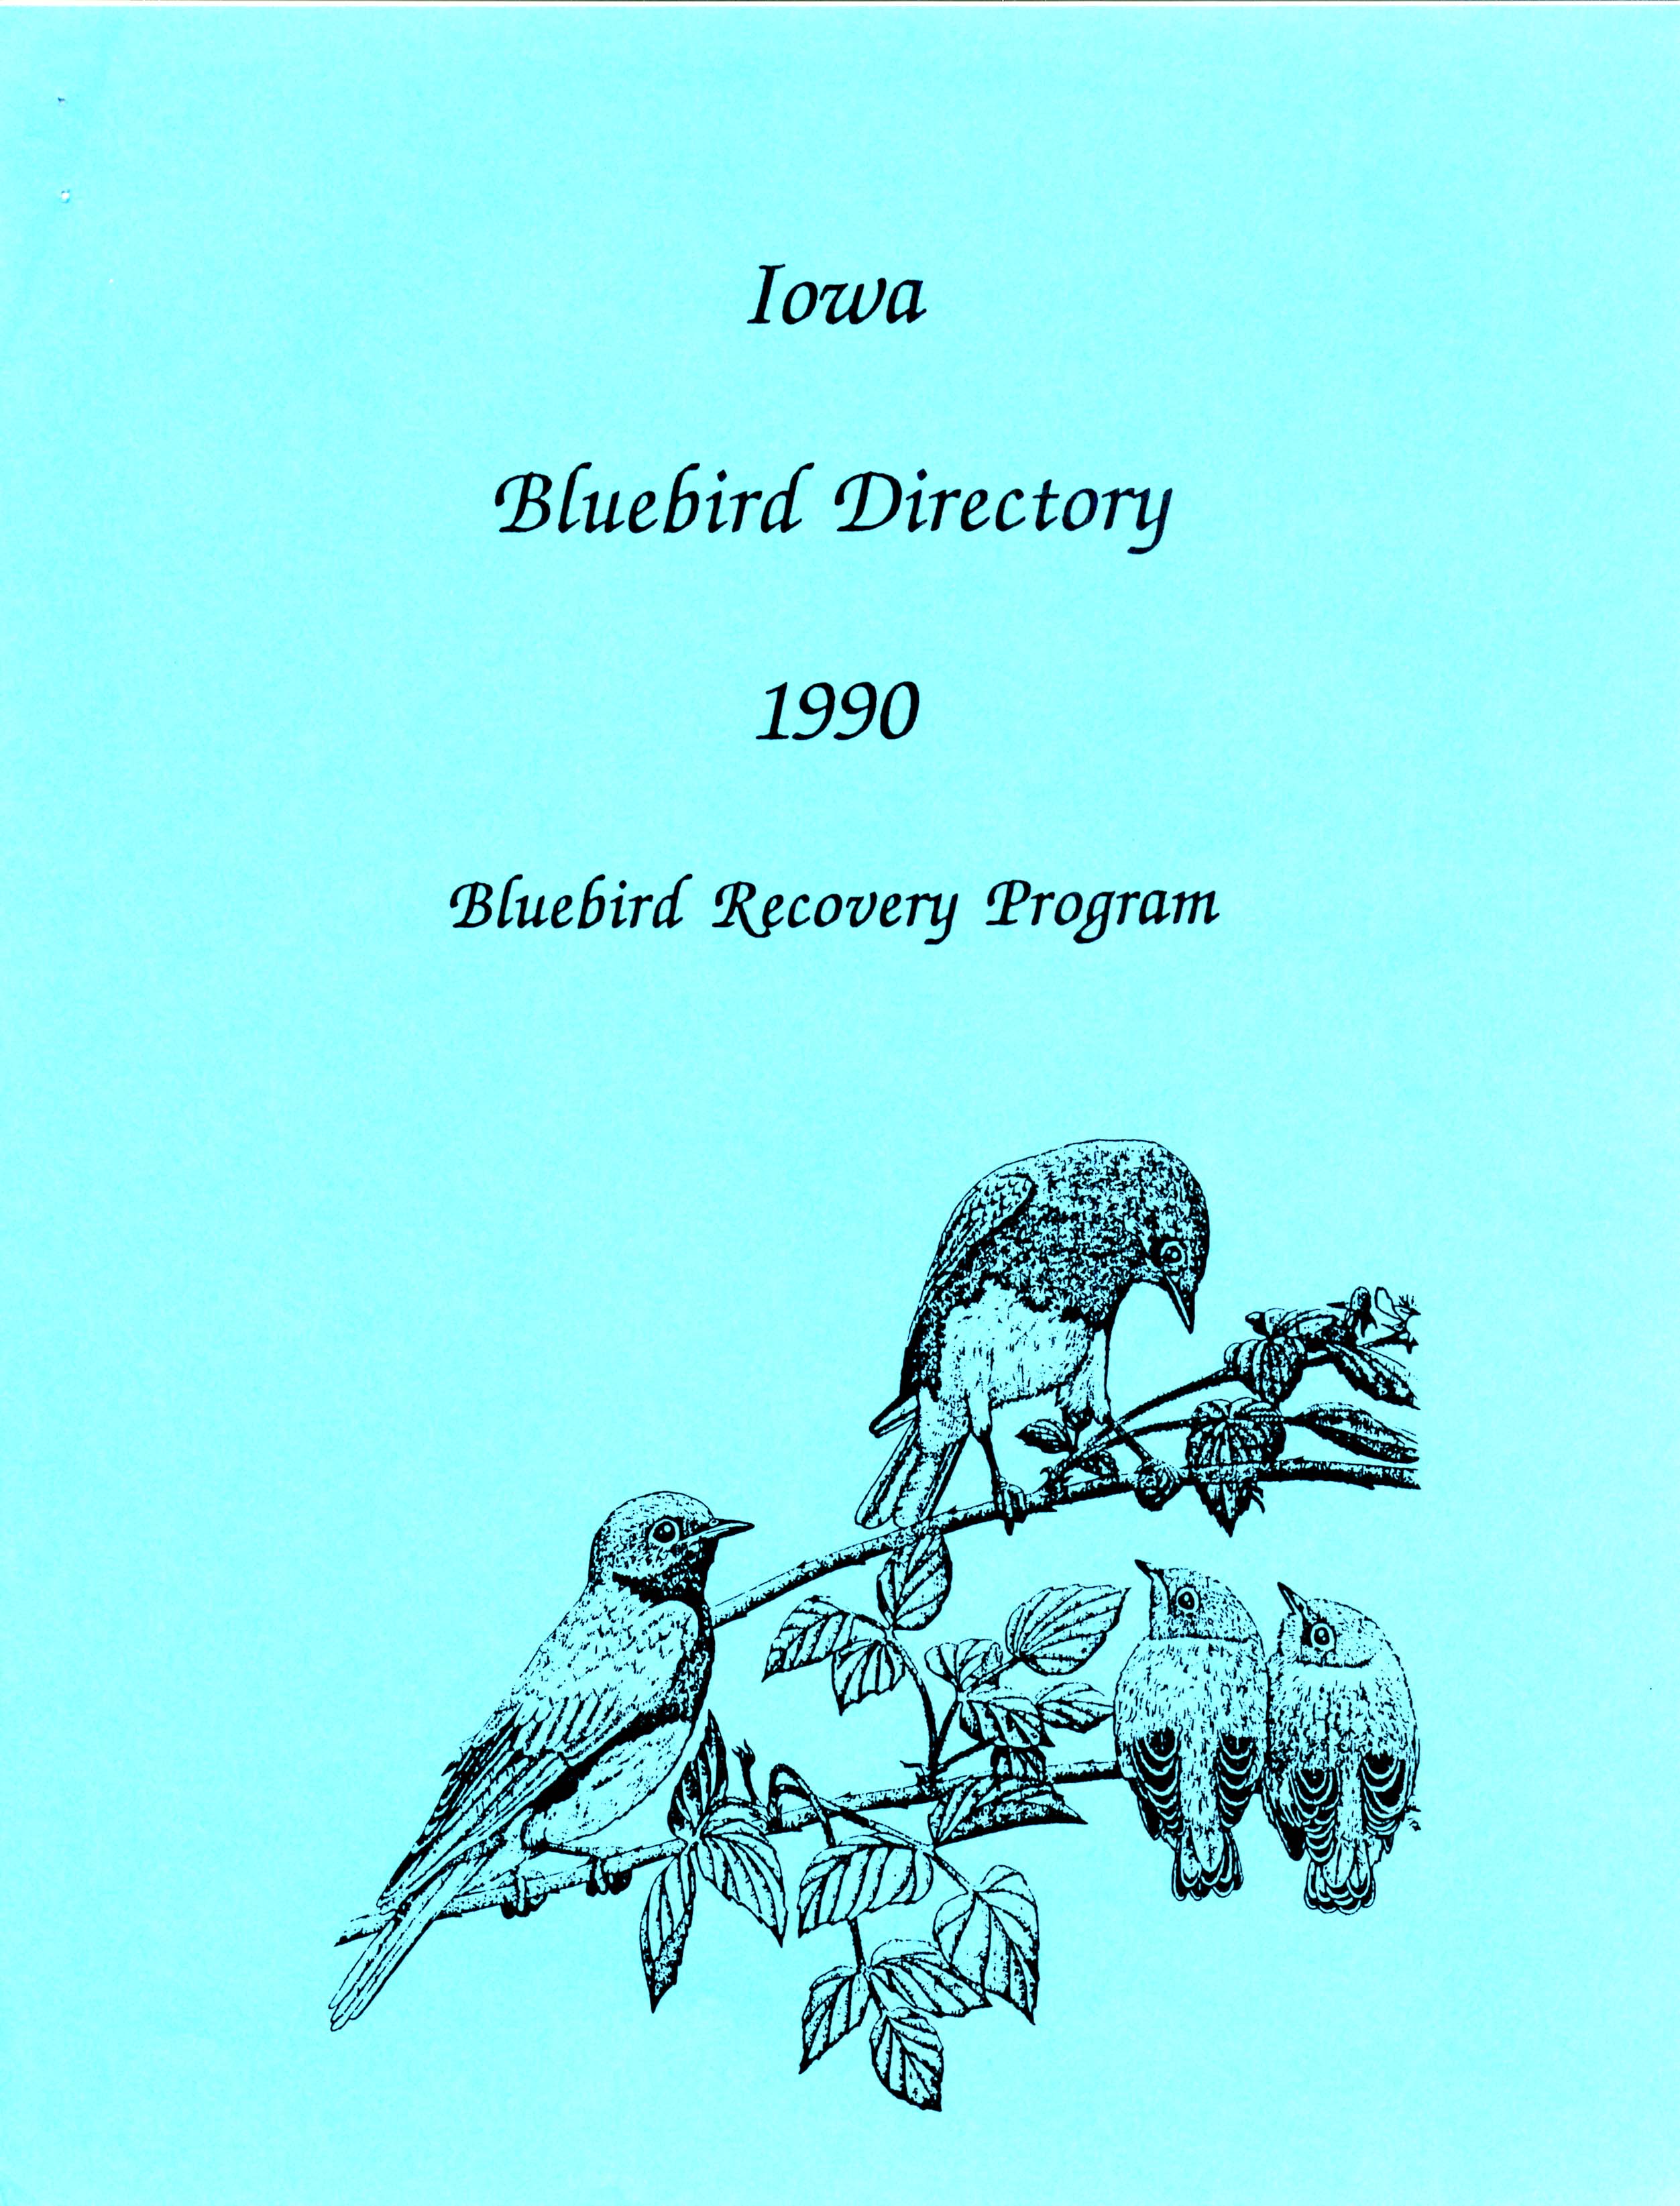 Iowa Bluebird Directory 1990, Bluebird Recovery Program